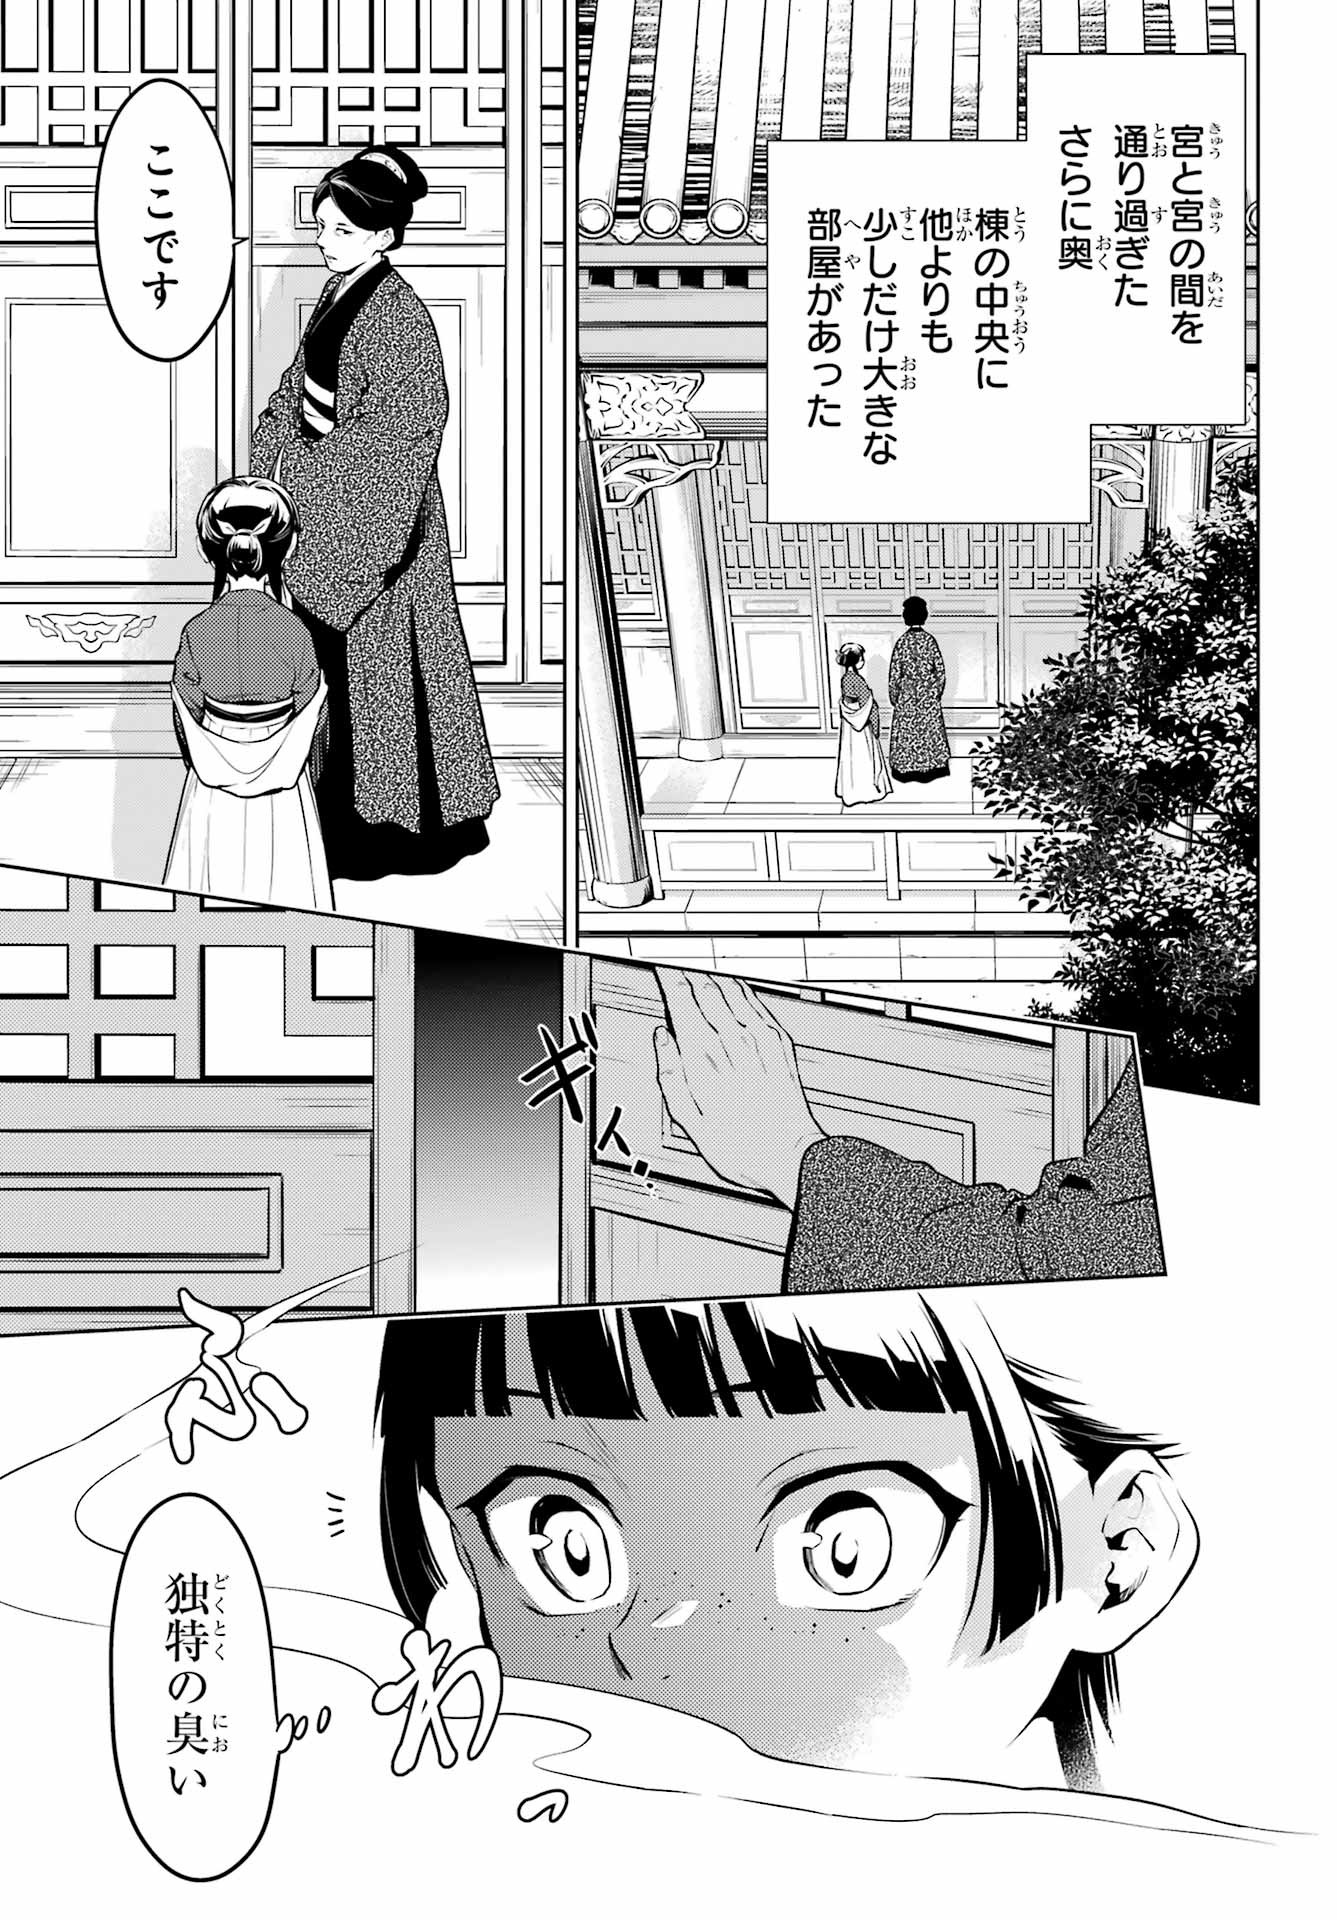 Kusuriya no Hitorigoto - Chapter 56 - Page 3